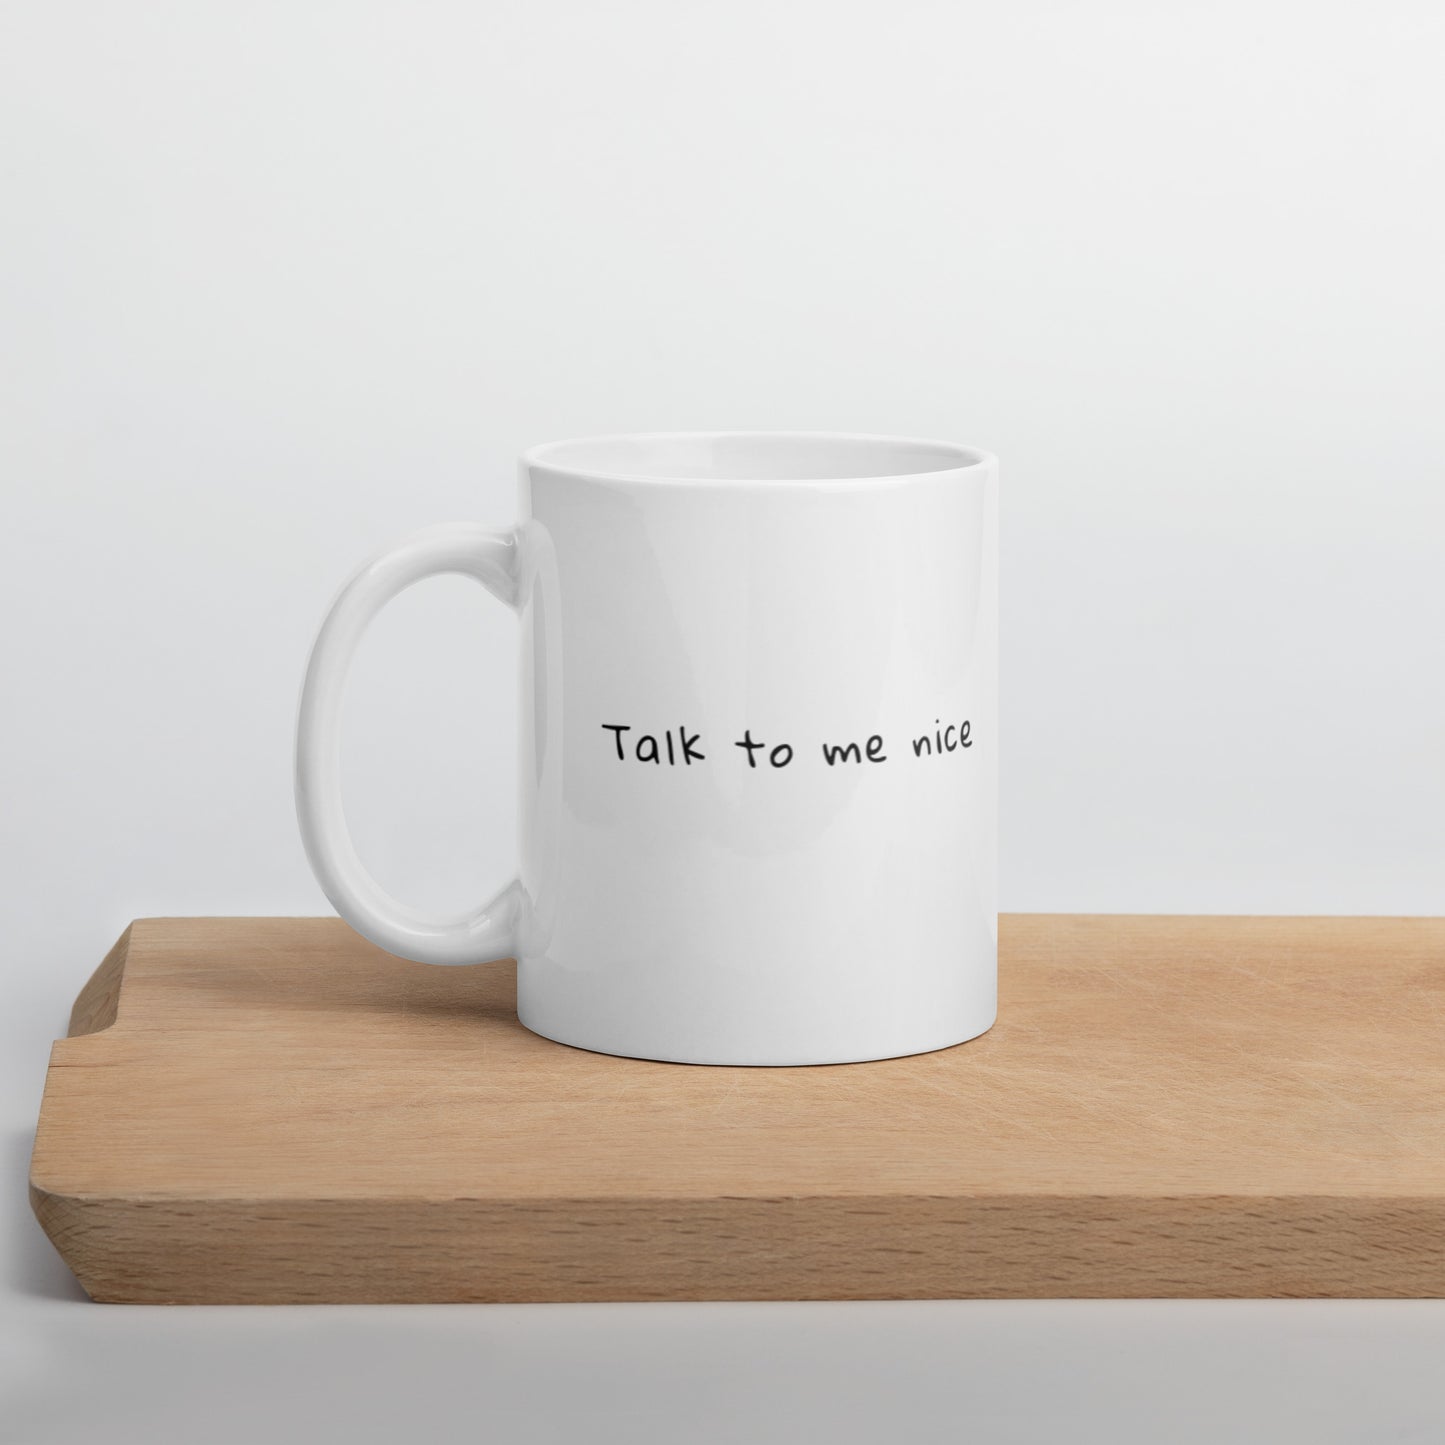 Talk to me nice mug